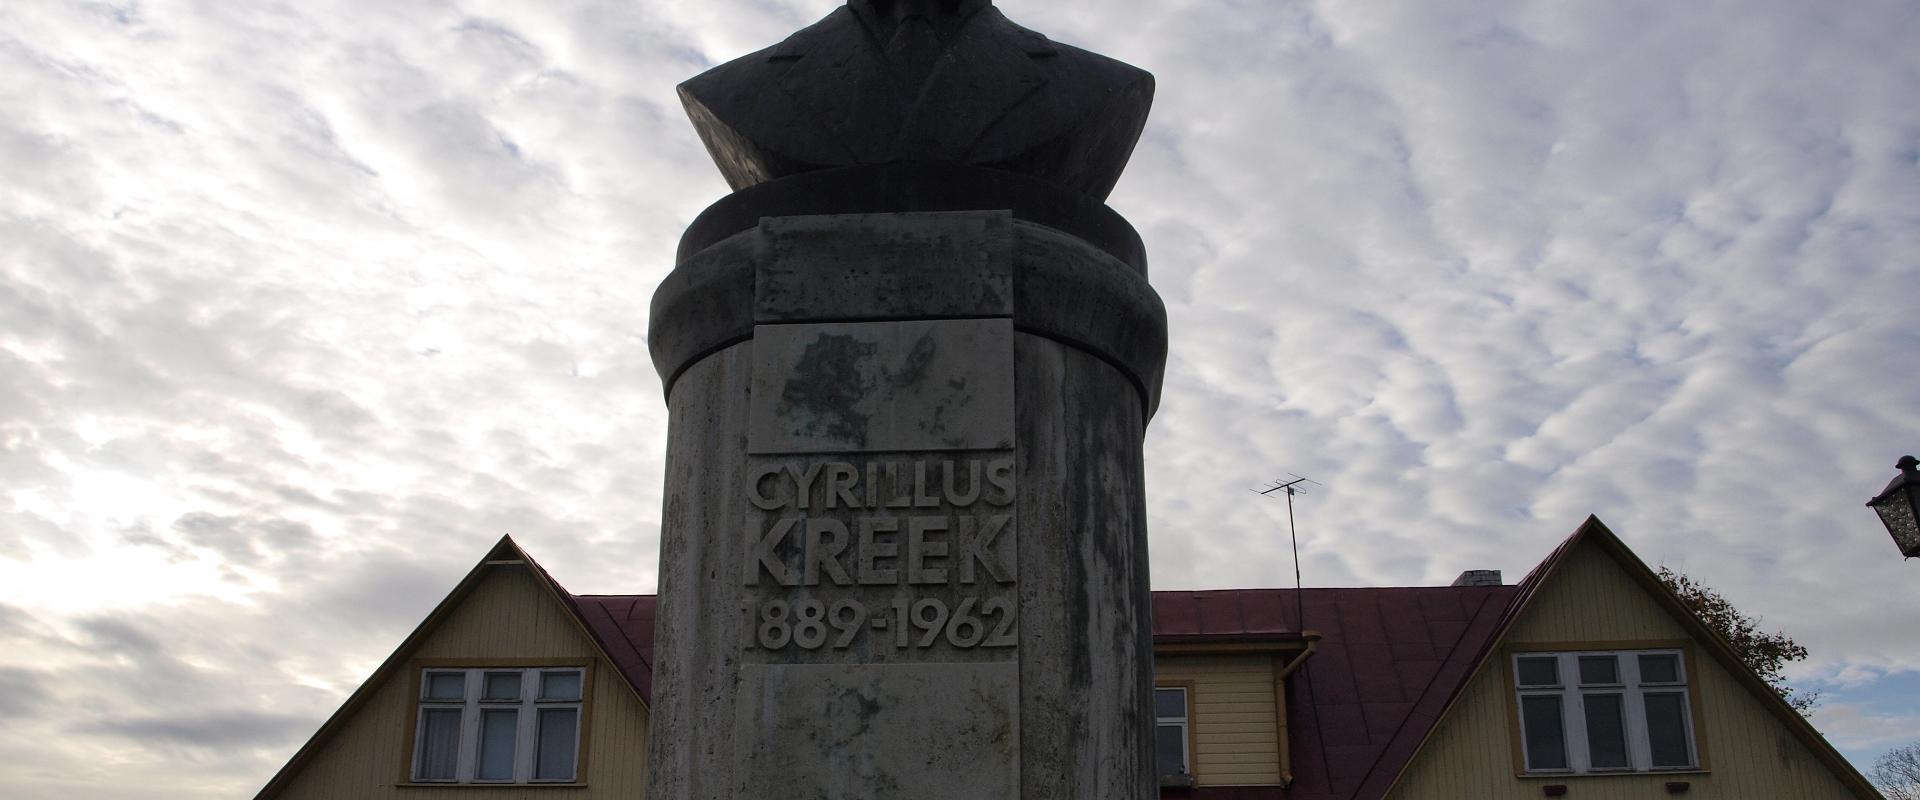 Memorial to Cyrillus Kreek